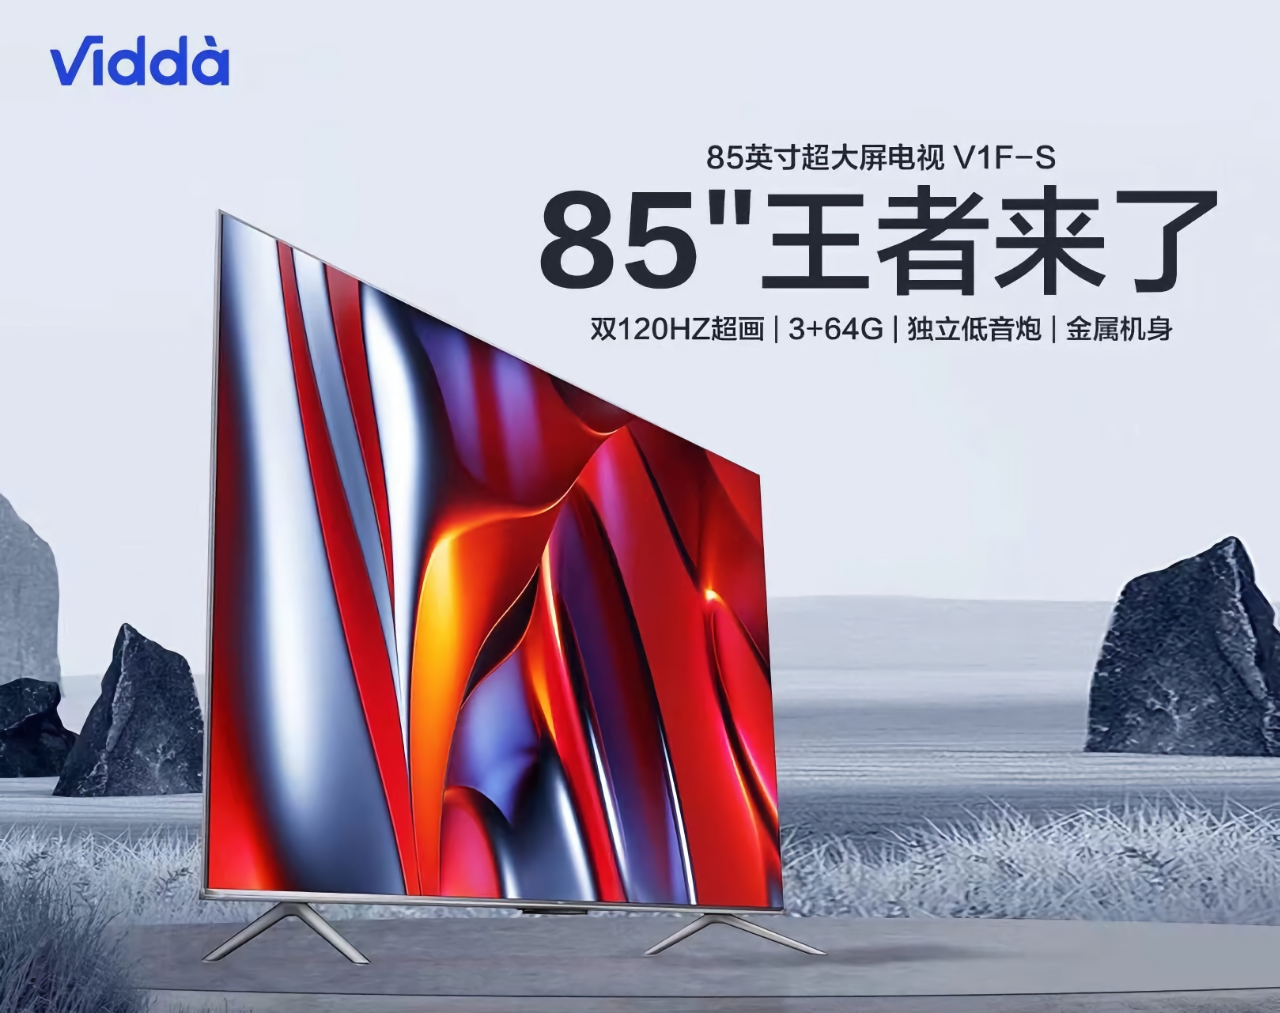 Hisense Vidda 85V1F-S Smart TV: 85-дюймовий смарт-телевізор з 4K LCD-екраном на 120 Гц за $1315